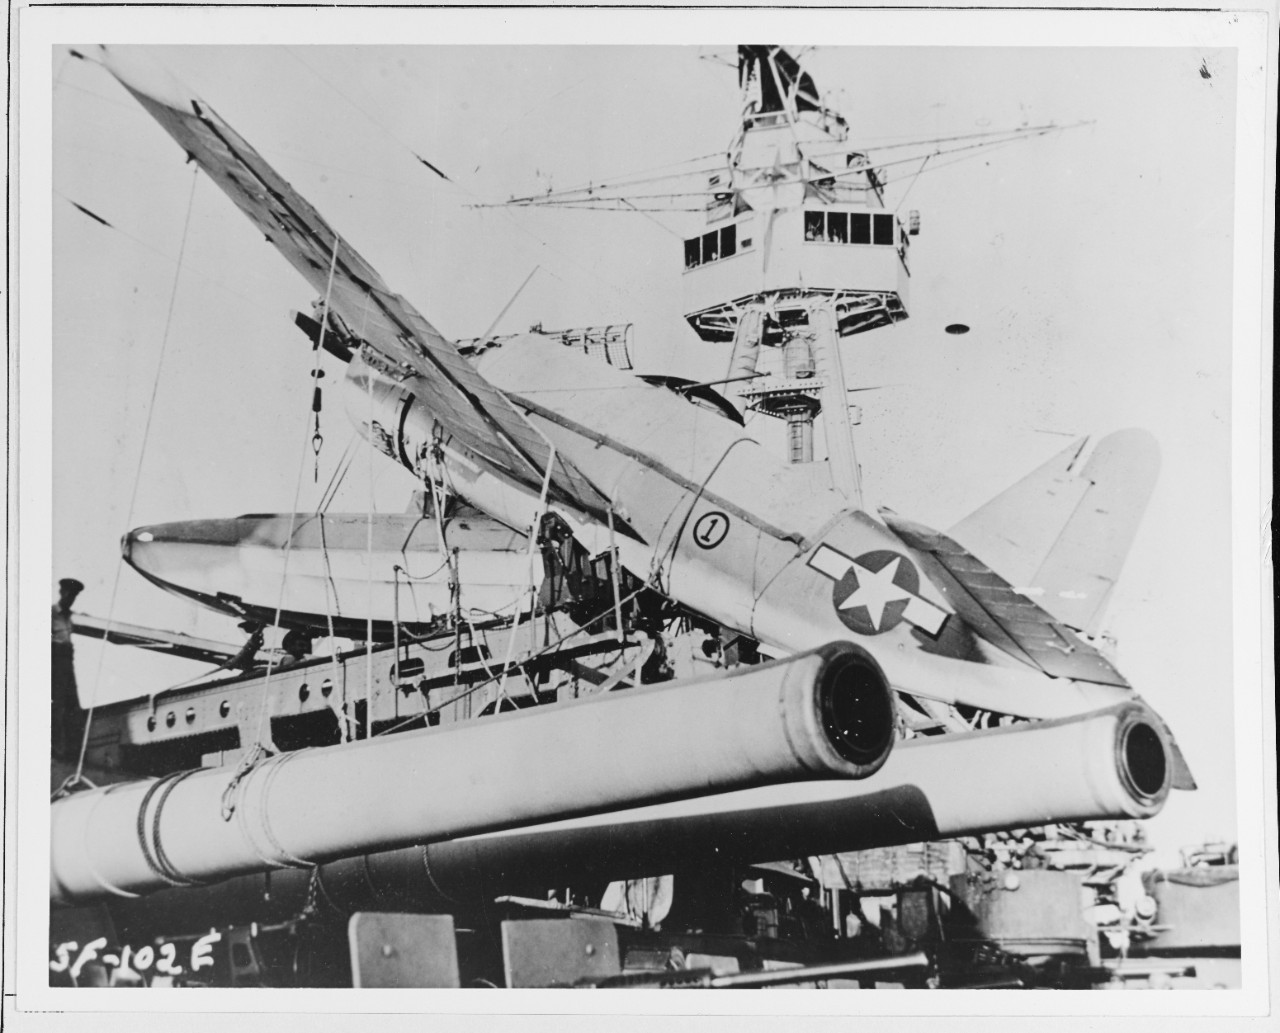 Damage aboard USS NEW YORK, 14 April 1945.